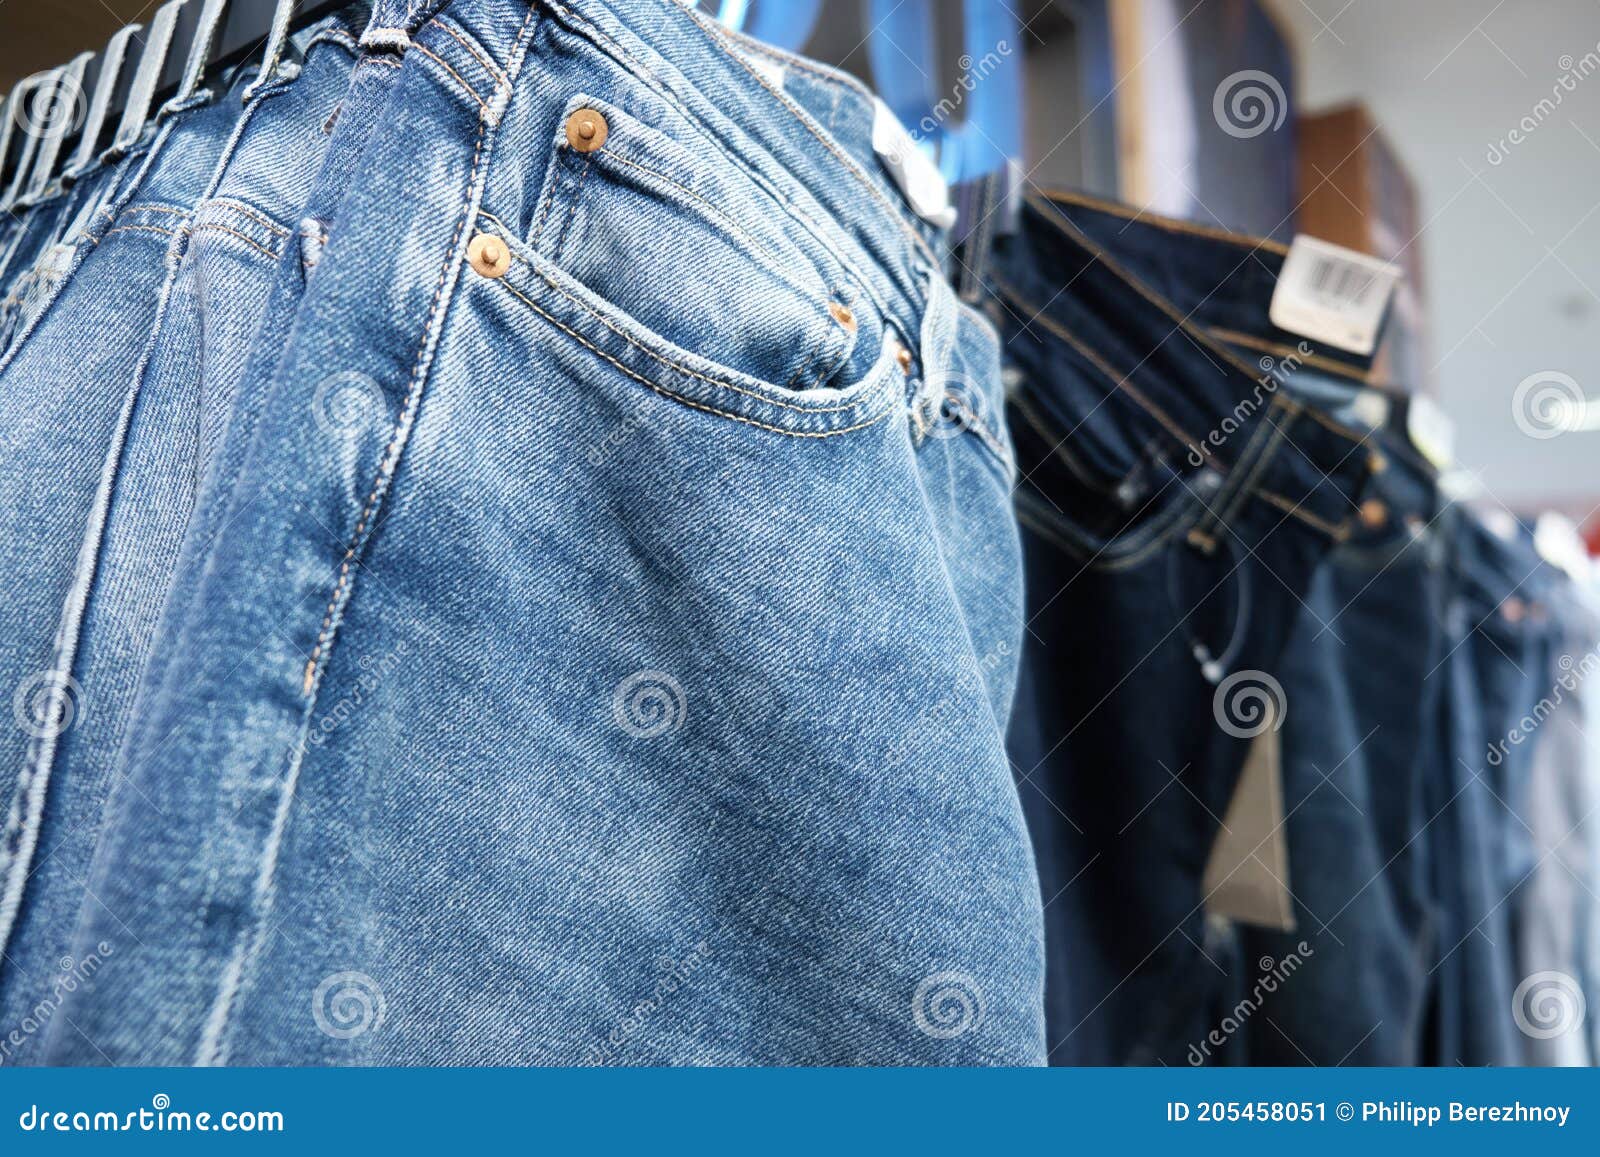 Denim Pants Hang on Retail Store Display Stock Image - Image of display ...